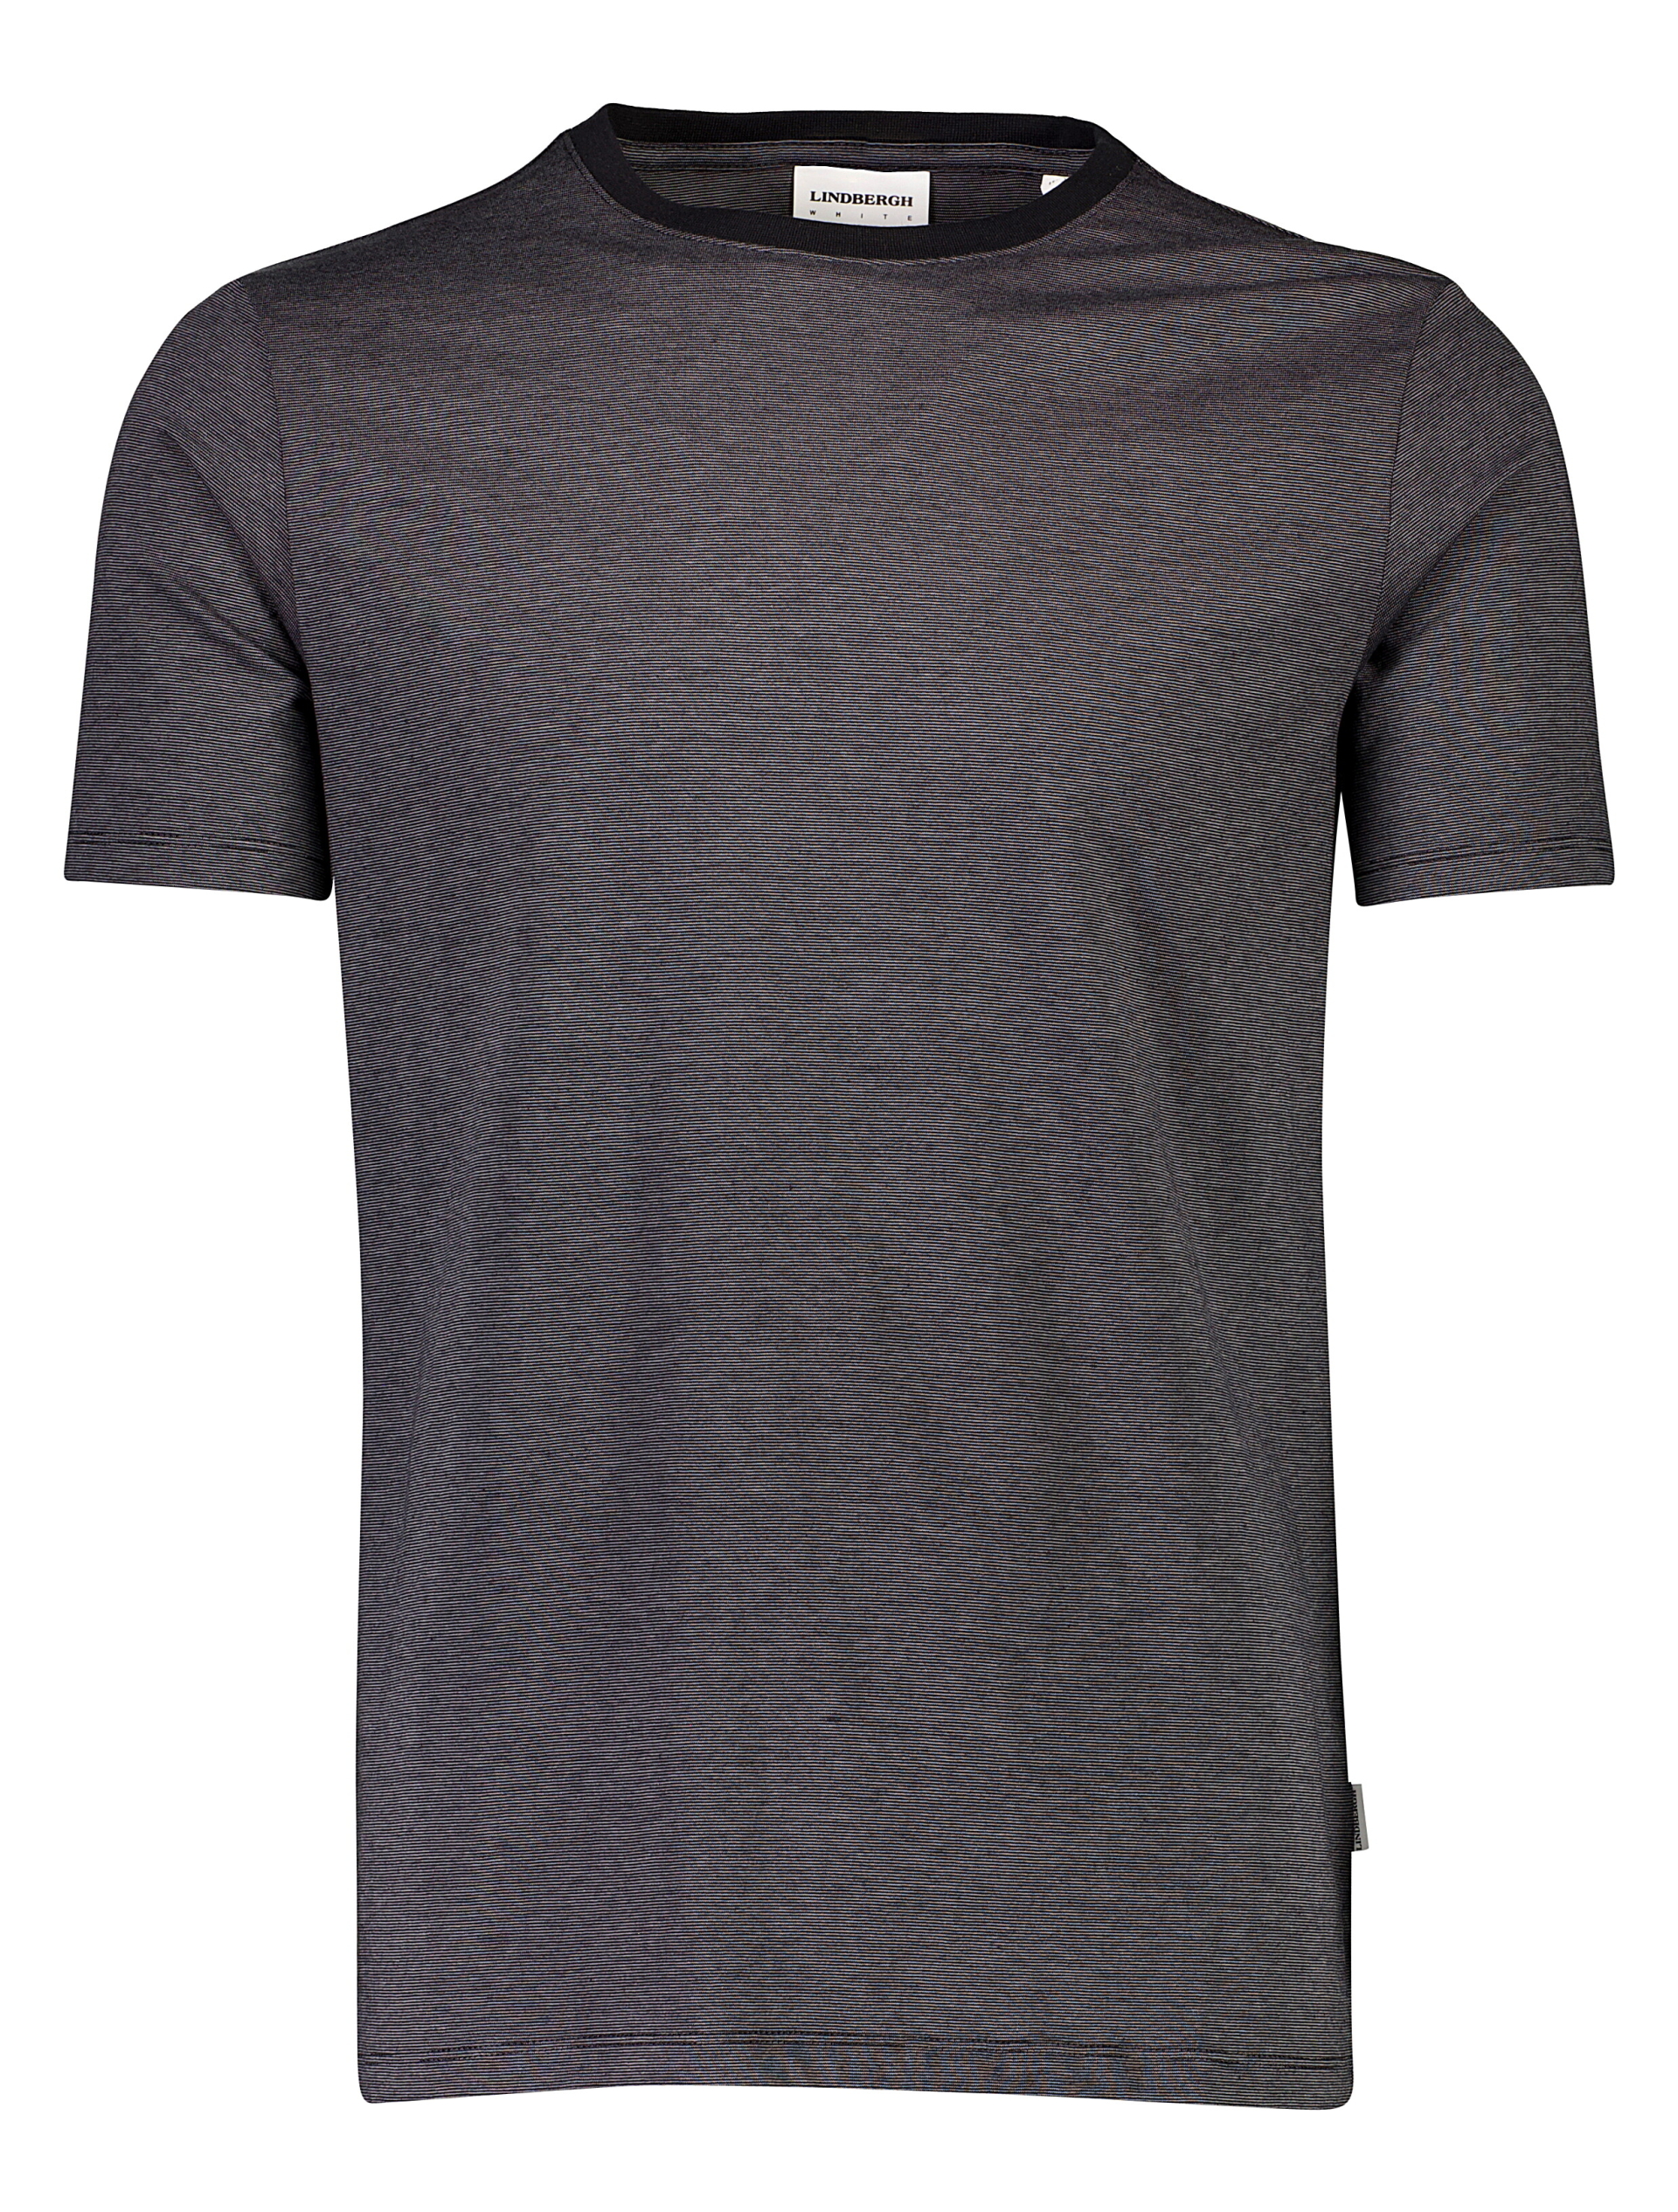 Lindbergh T-Shirt grau / dk grey